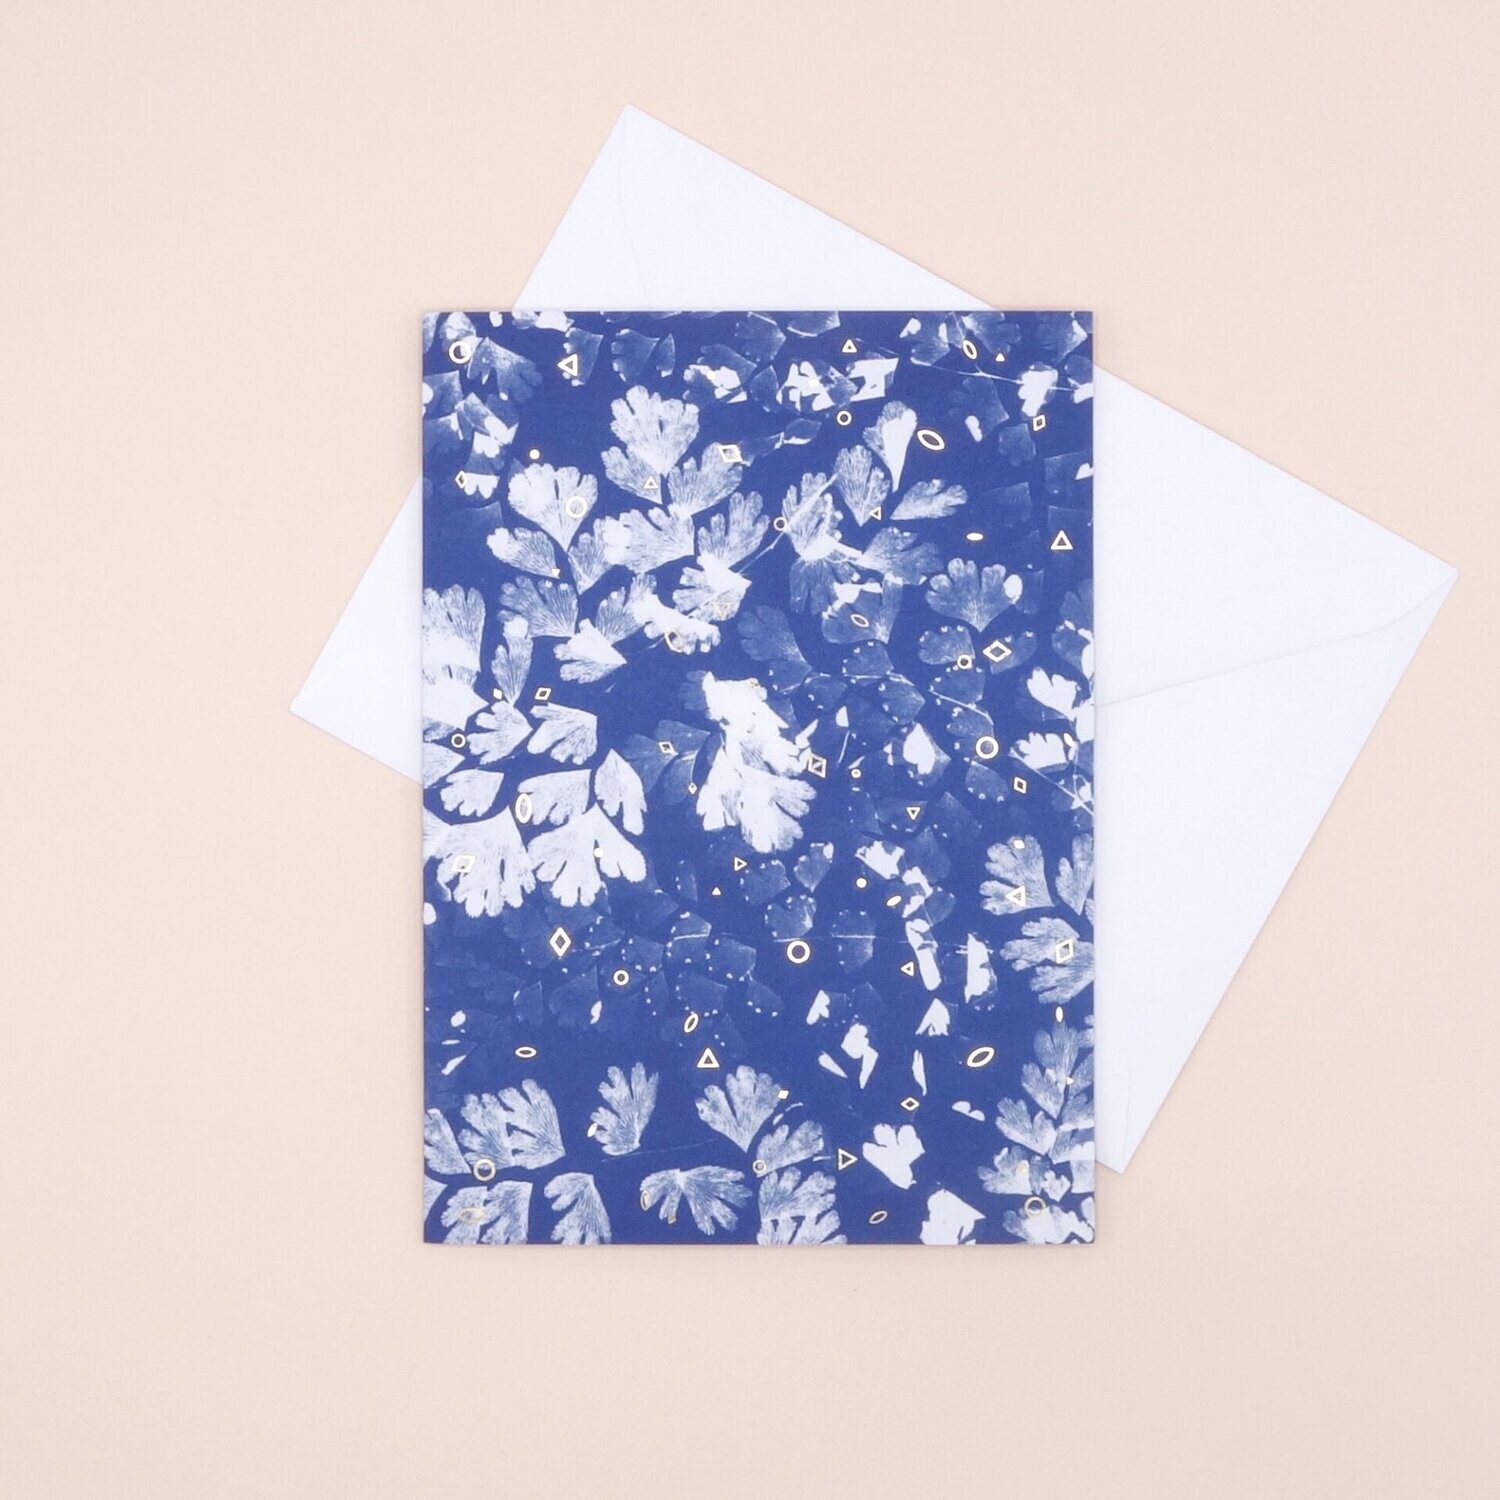 Grußkarte im Cyanotype-Design - Blättermeer